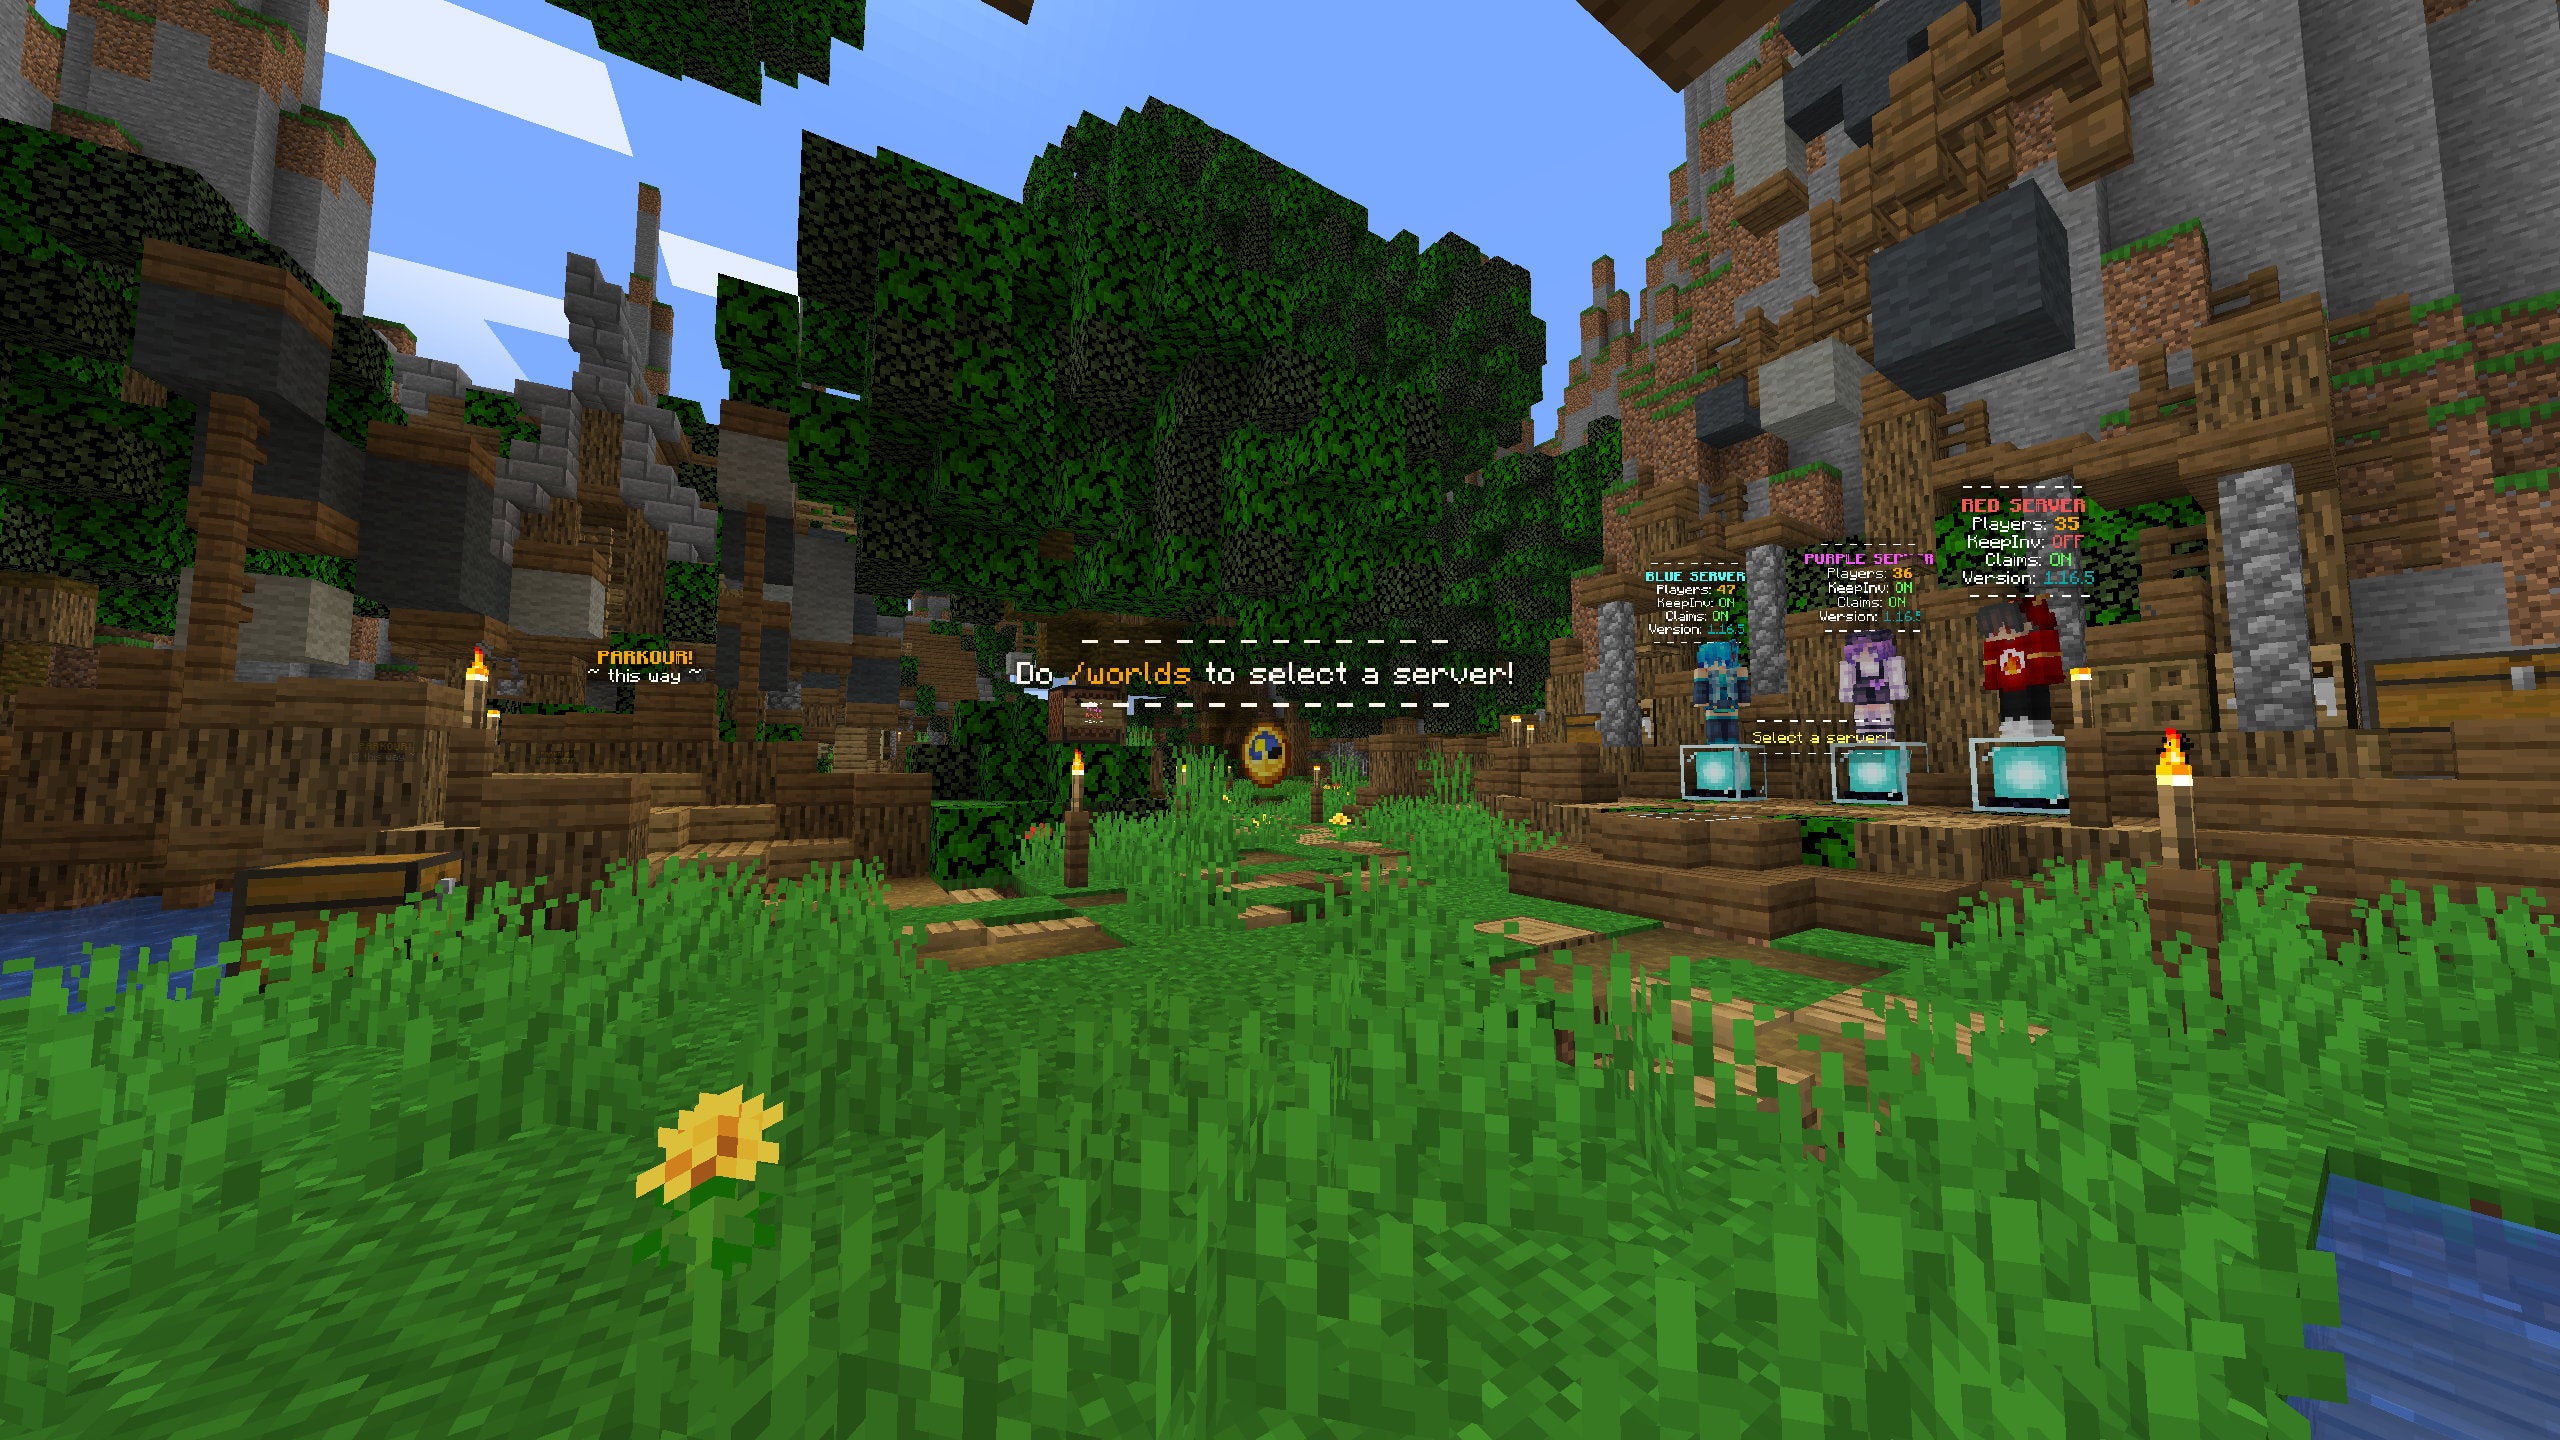 A Minecraft screenshot of the lobby of the Applecraft server.